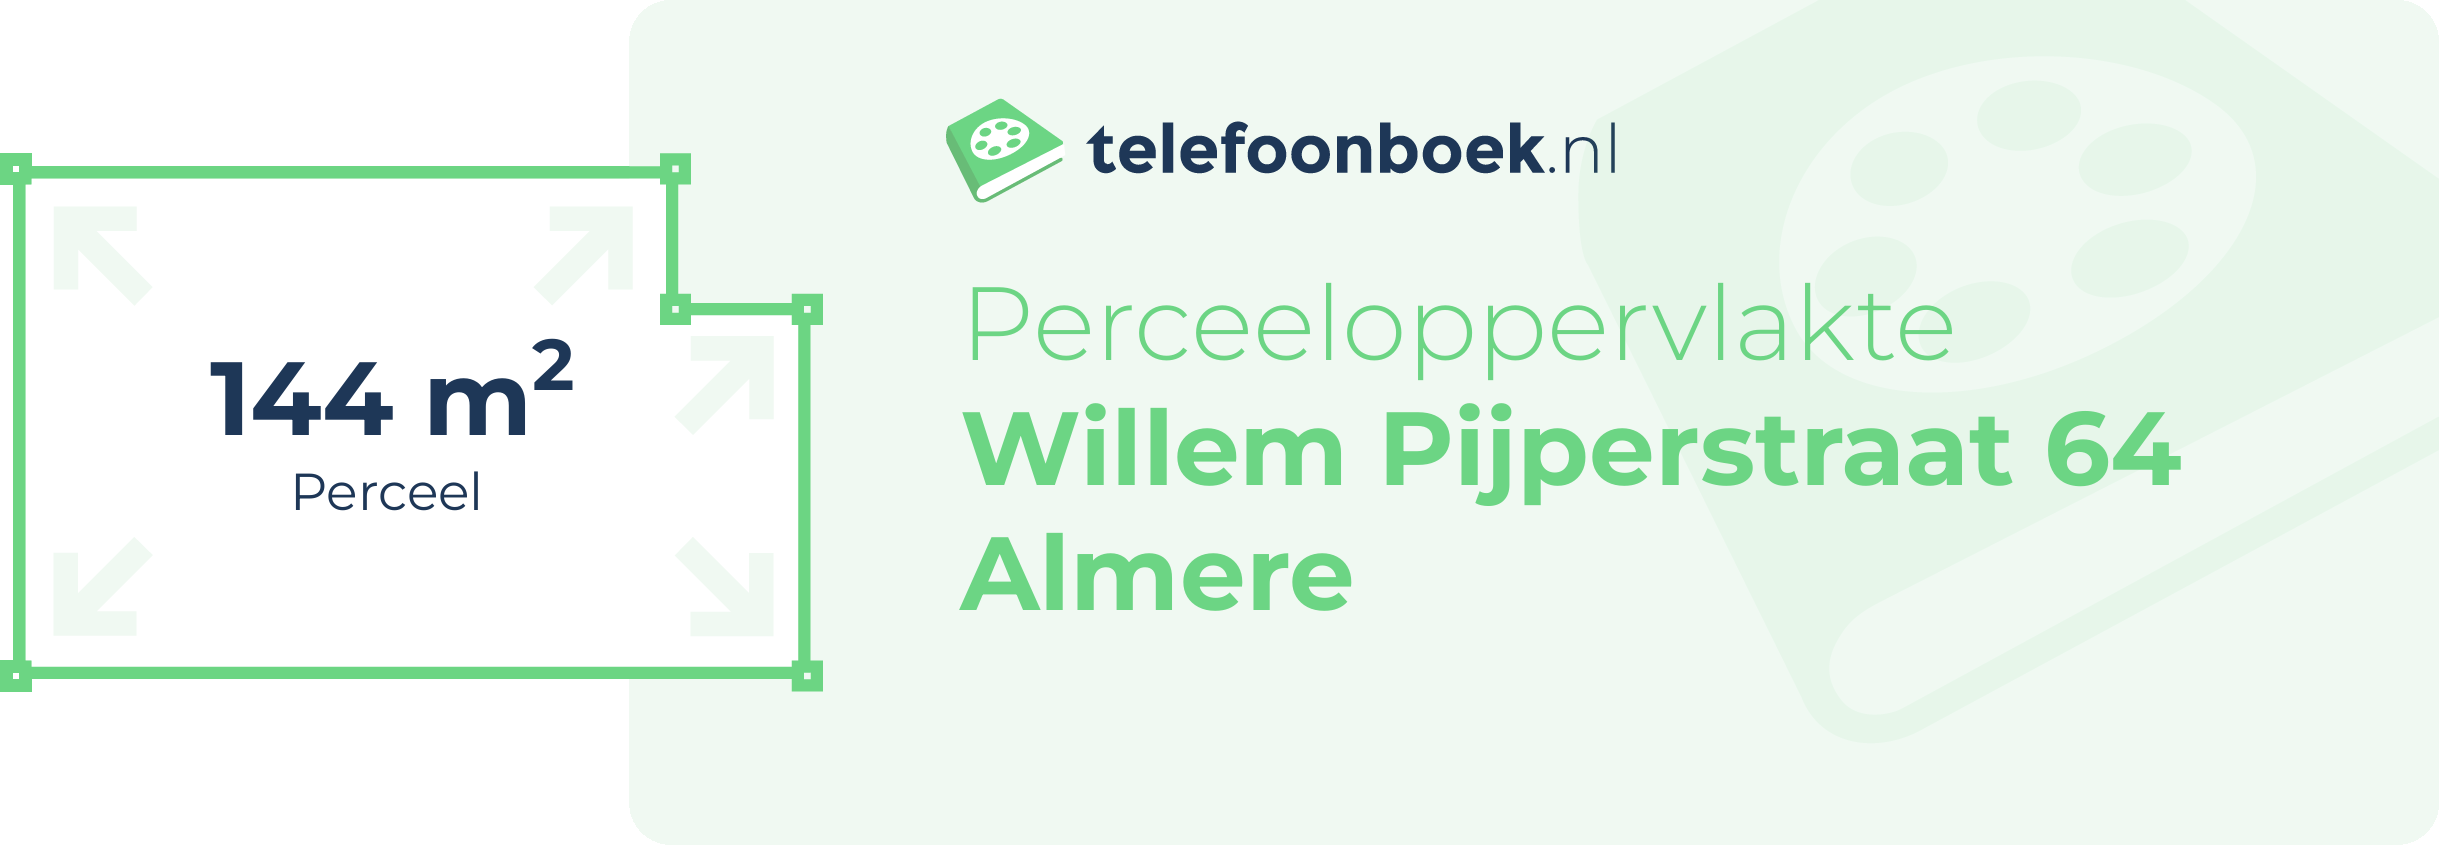 Perceeloppervlakte Willem Pijperstraat 64 Almere